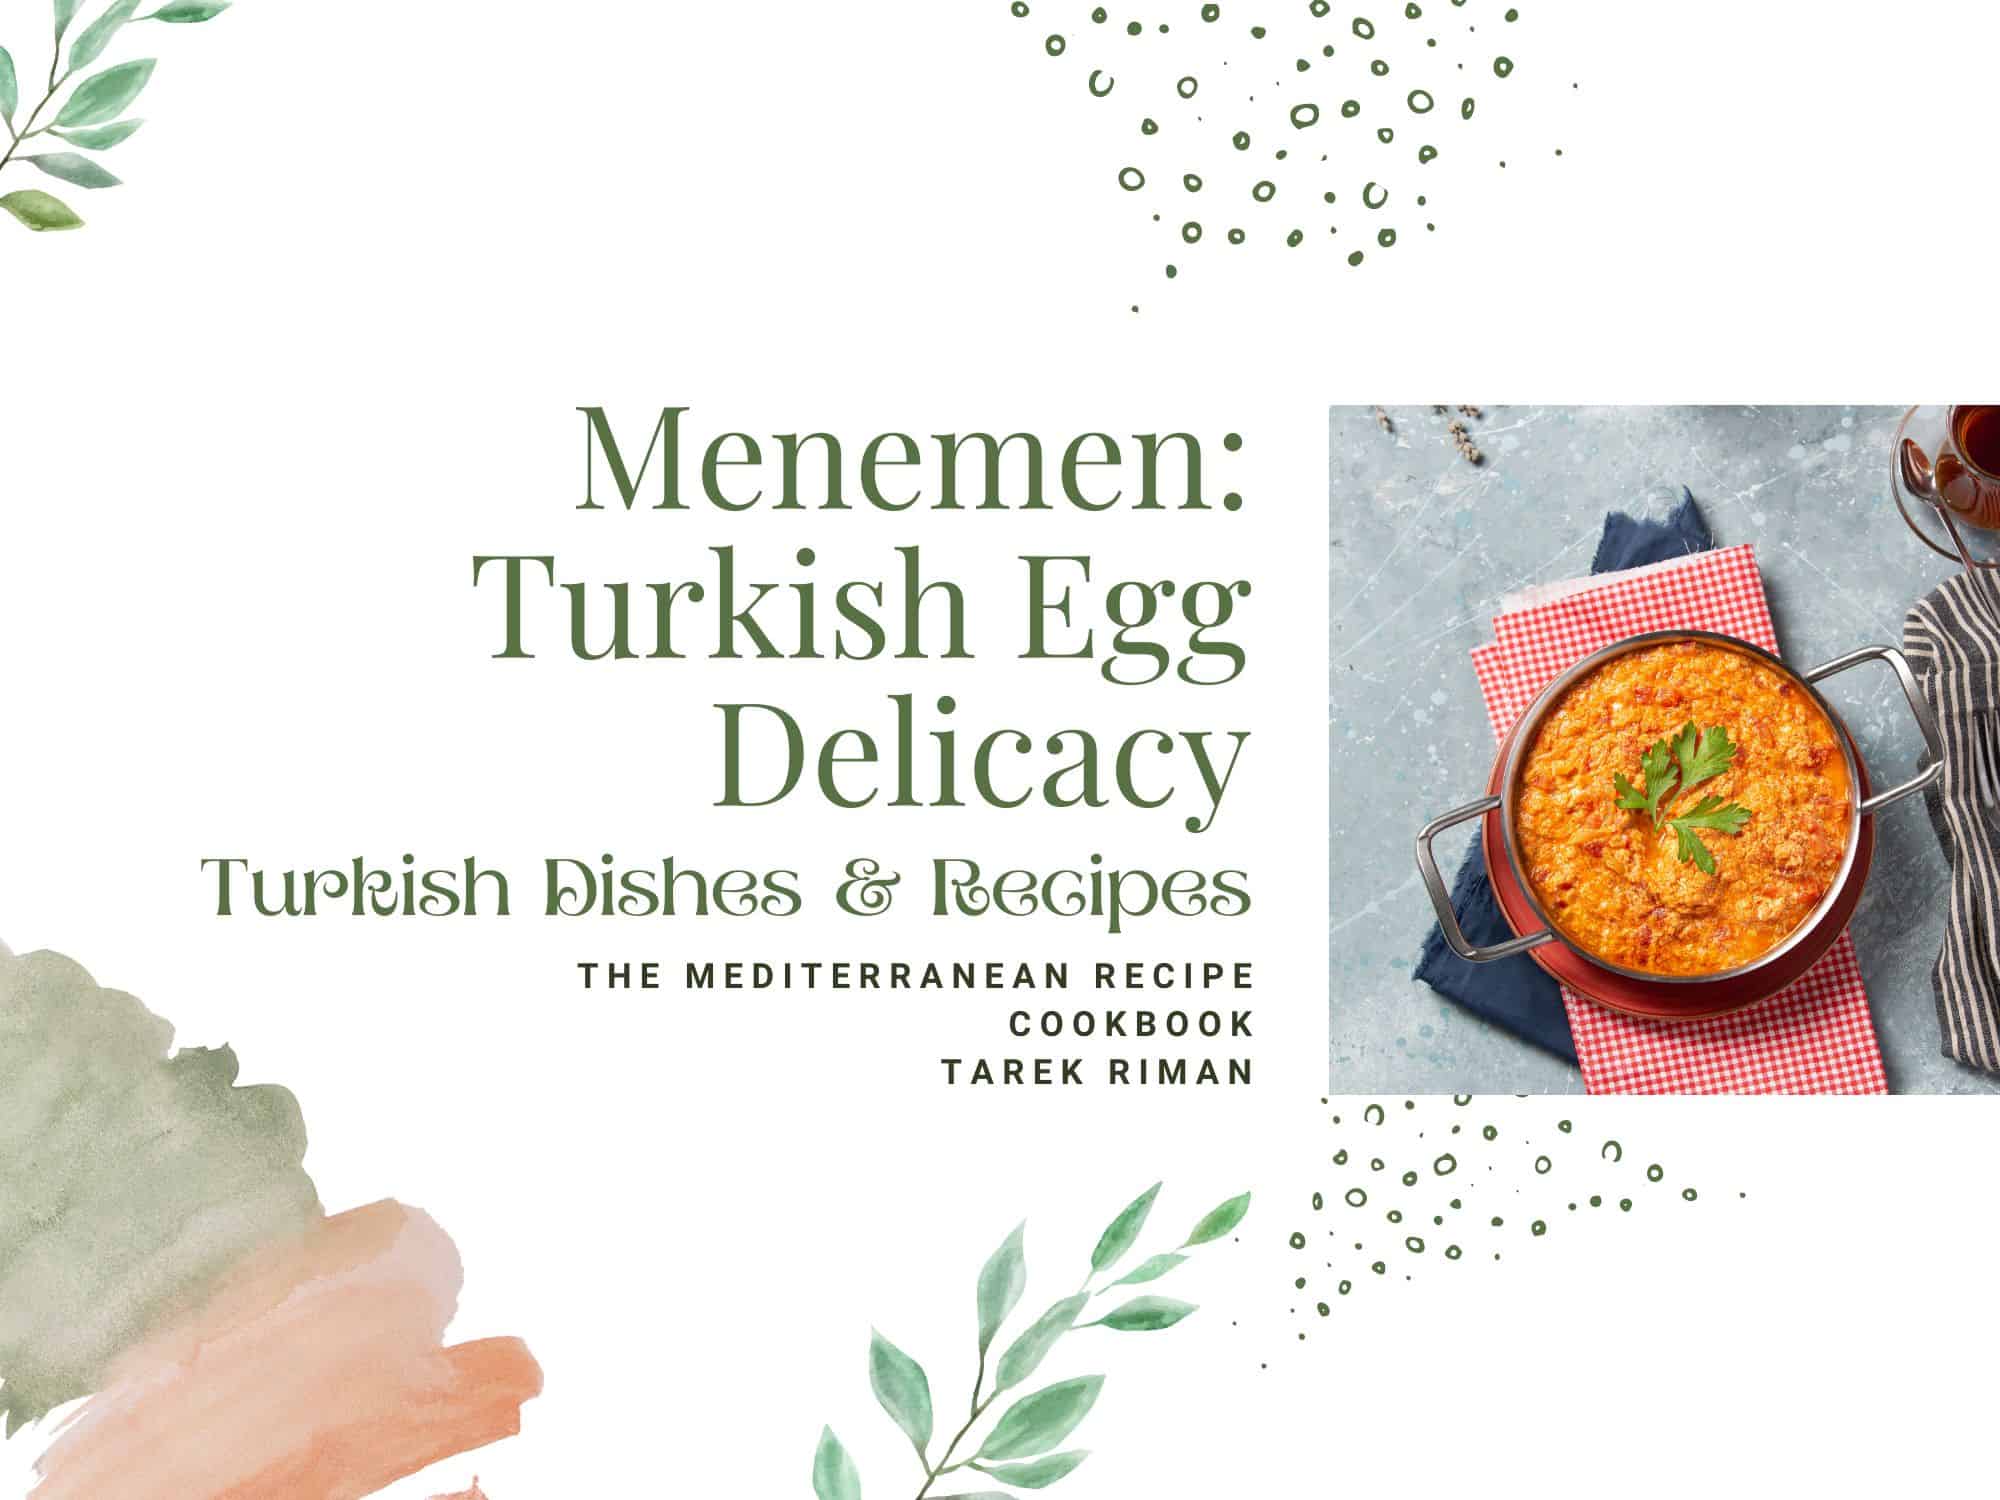 How to make Menemen: Turkish Egg Delicacy